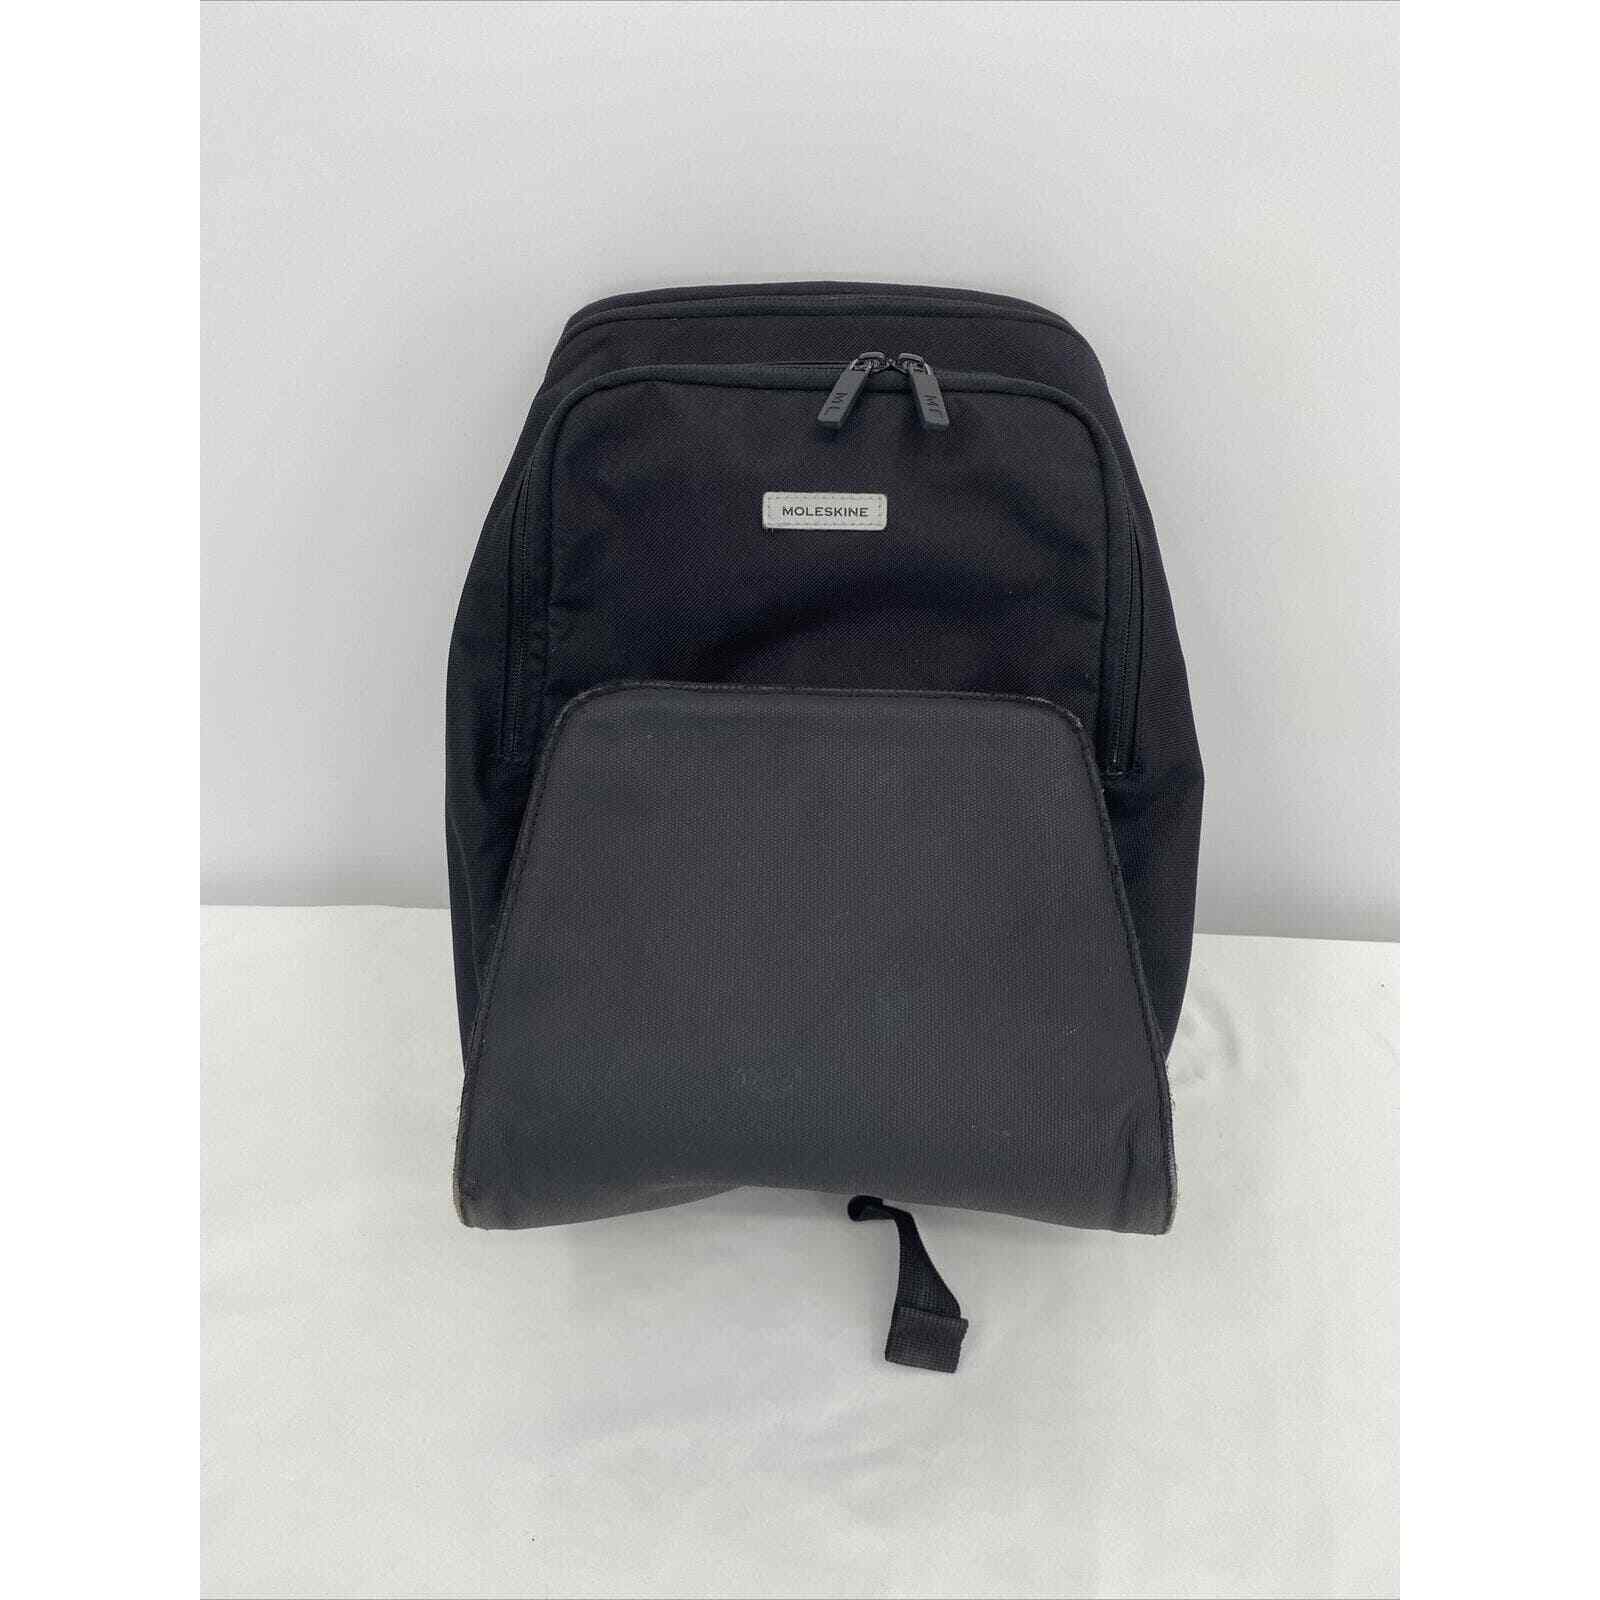 Moleskine Nomad Laptop Backpack Black Large